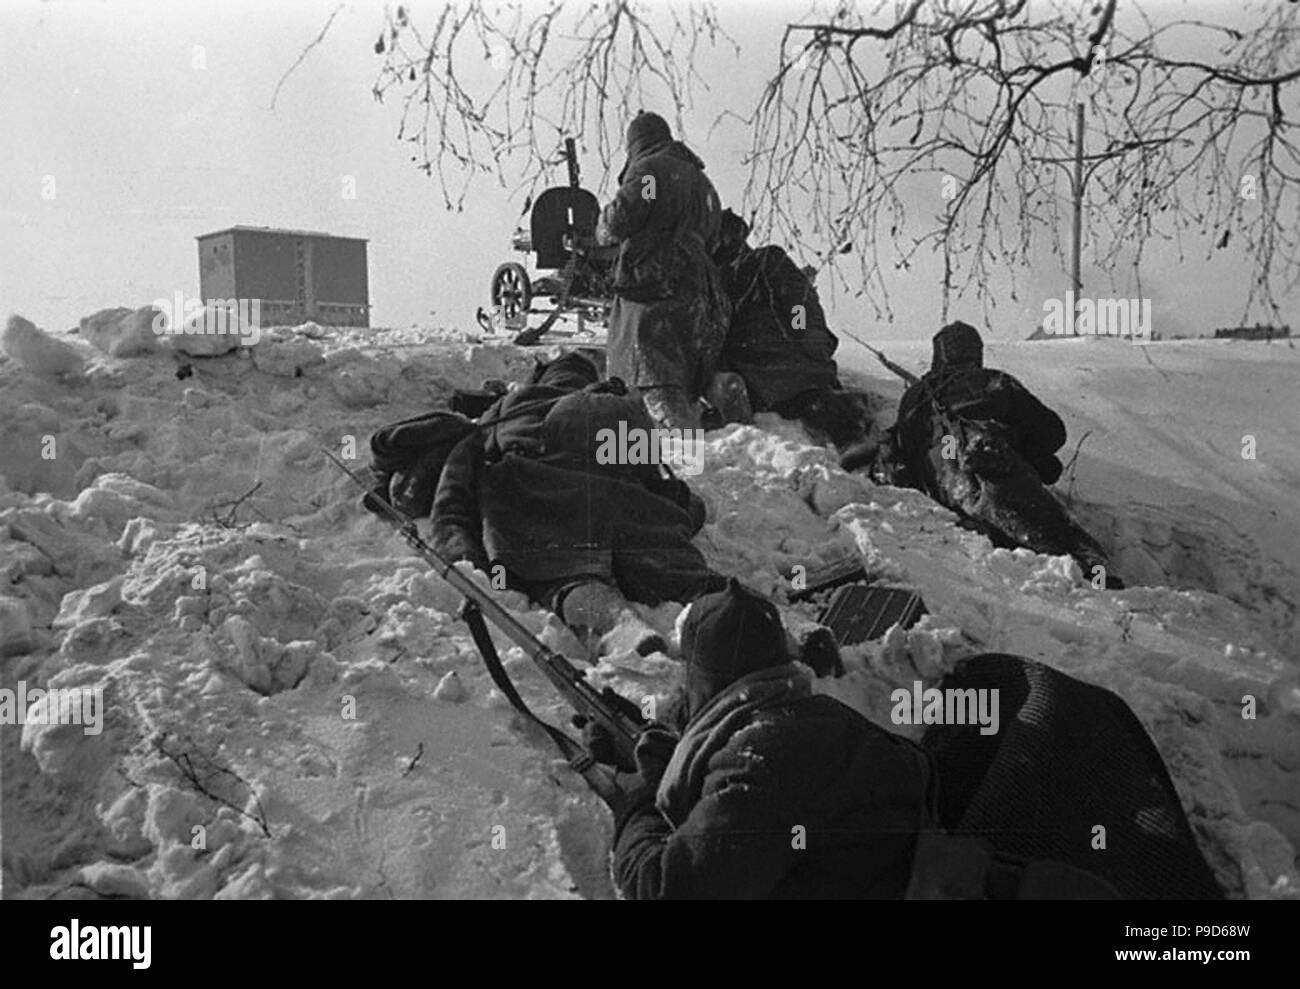 Ussr 1940 world war ii second world war Black and White Stock Photos ...